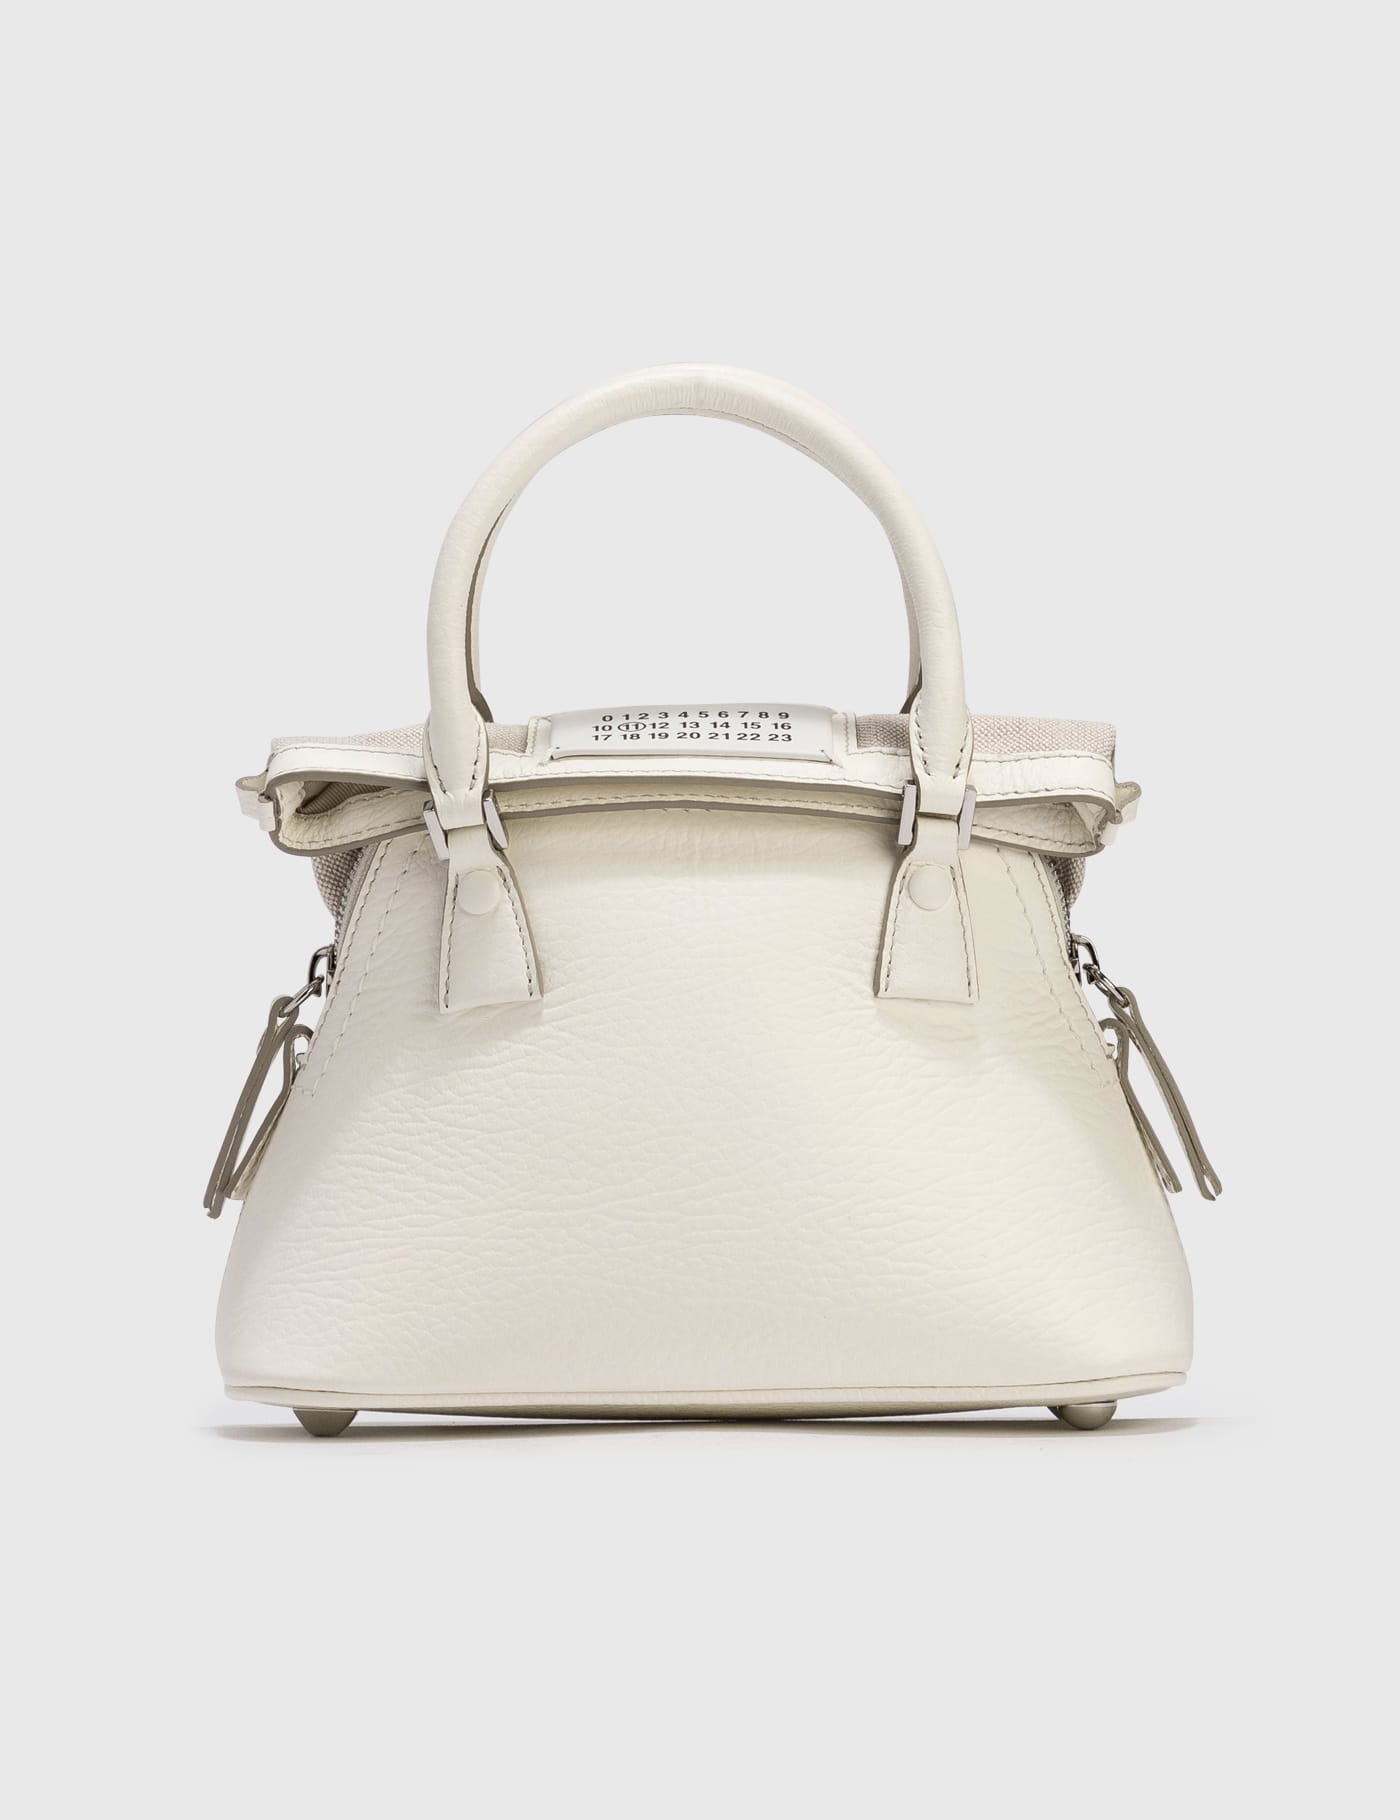 Maison Margiela - 5ac Micro Bag | HBX - HYPEBEAST 為您搜羅全球潮流時尚品牌